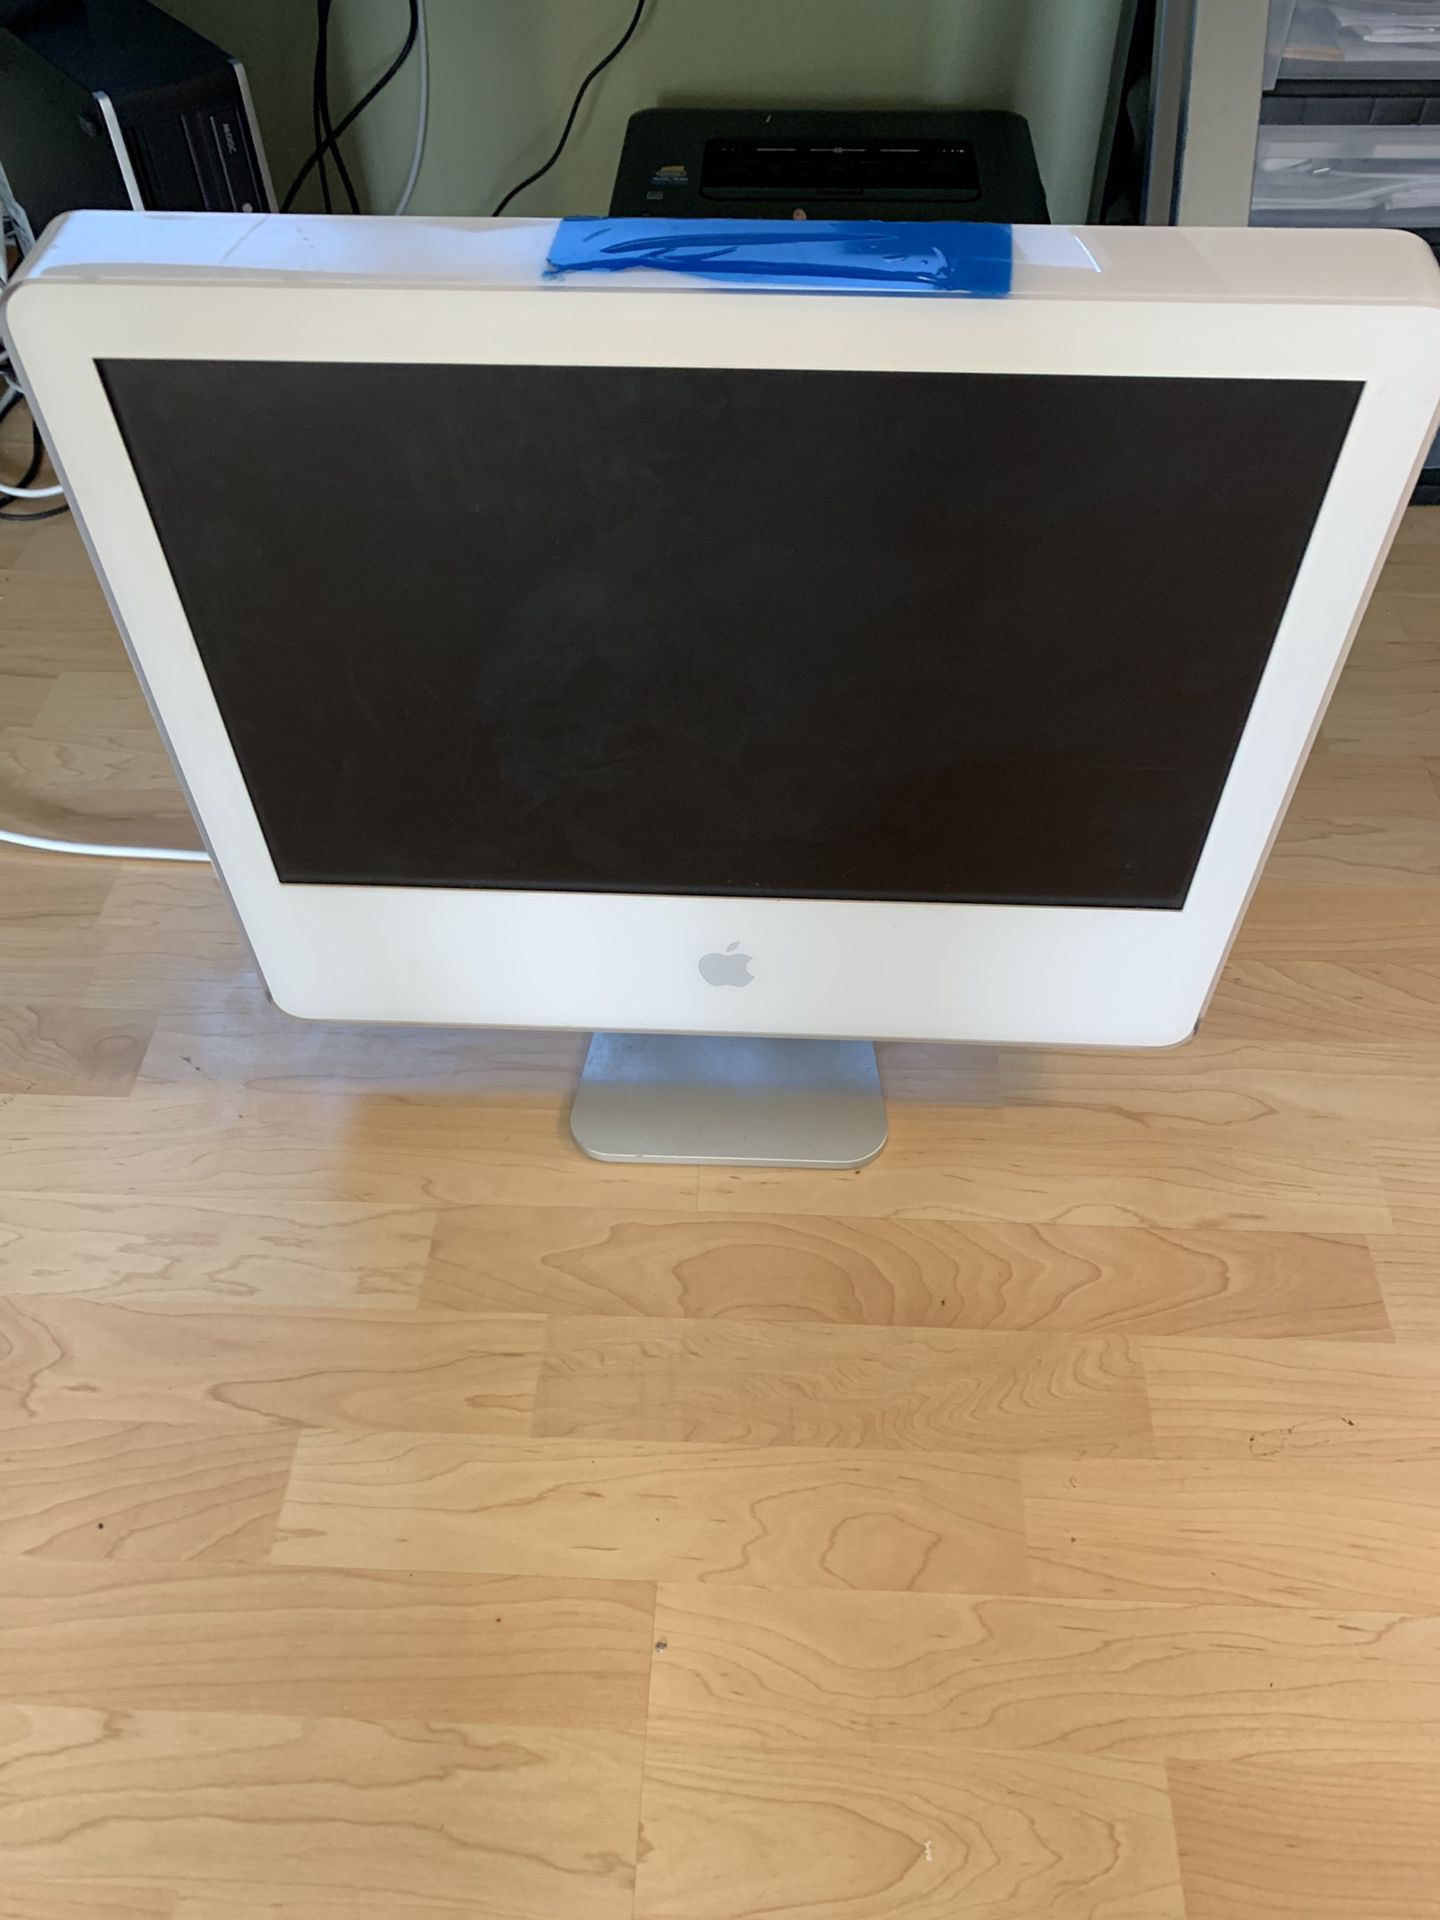 A1076 iMac computer